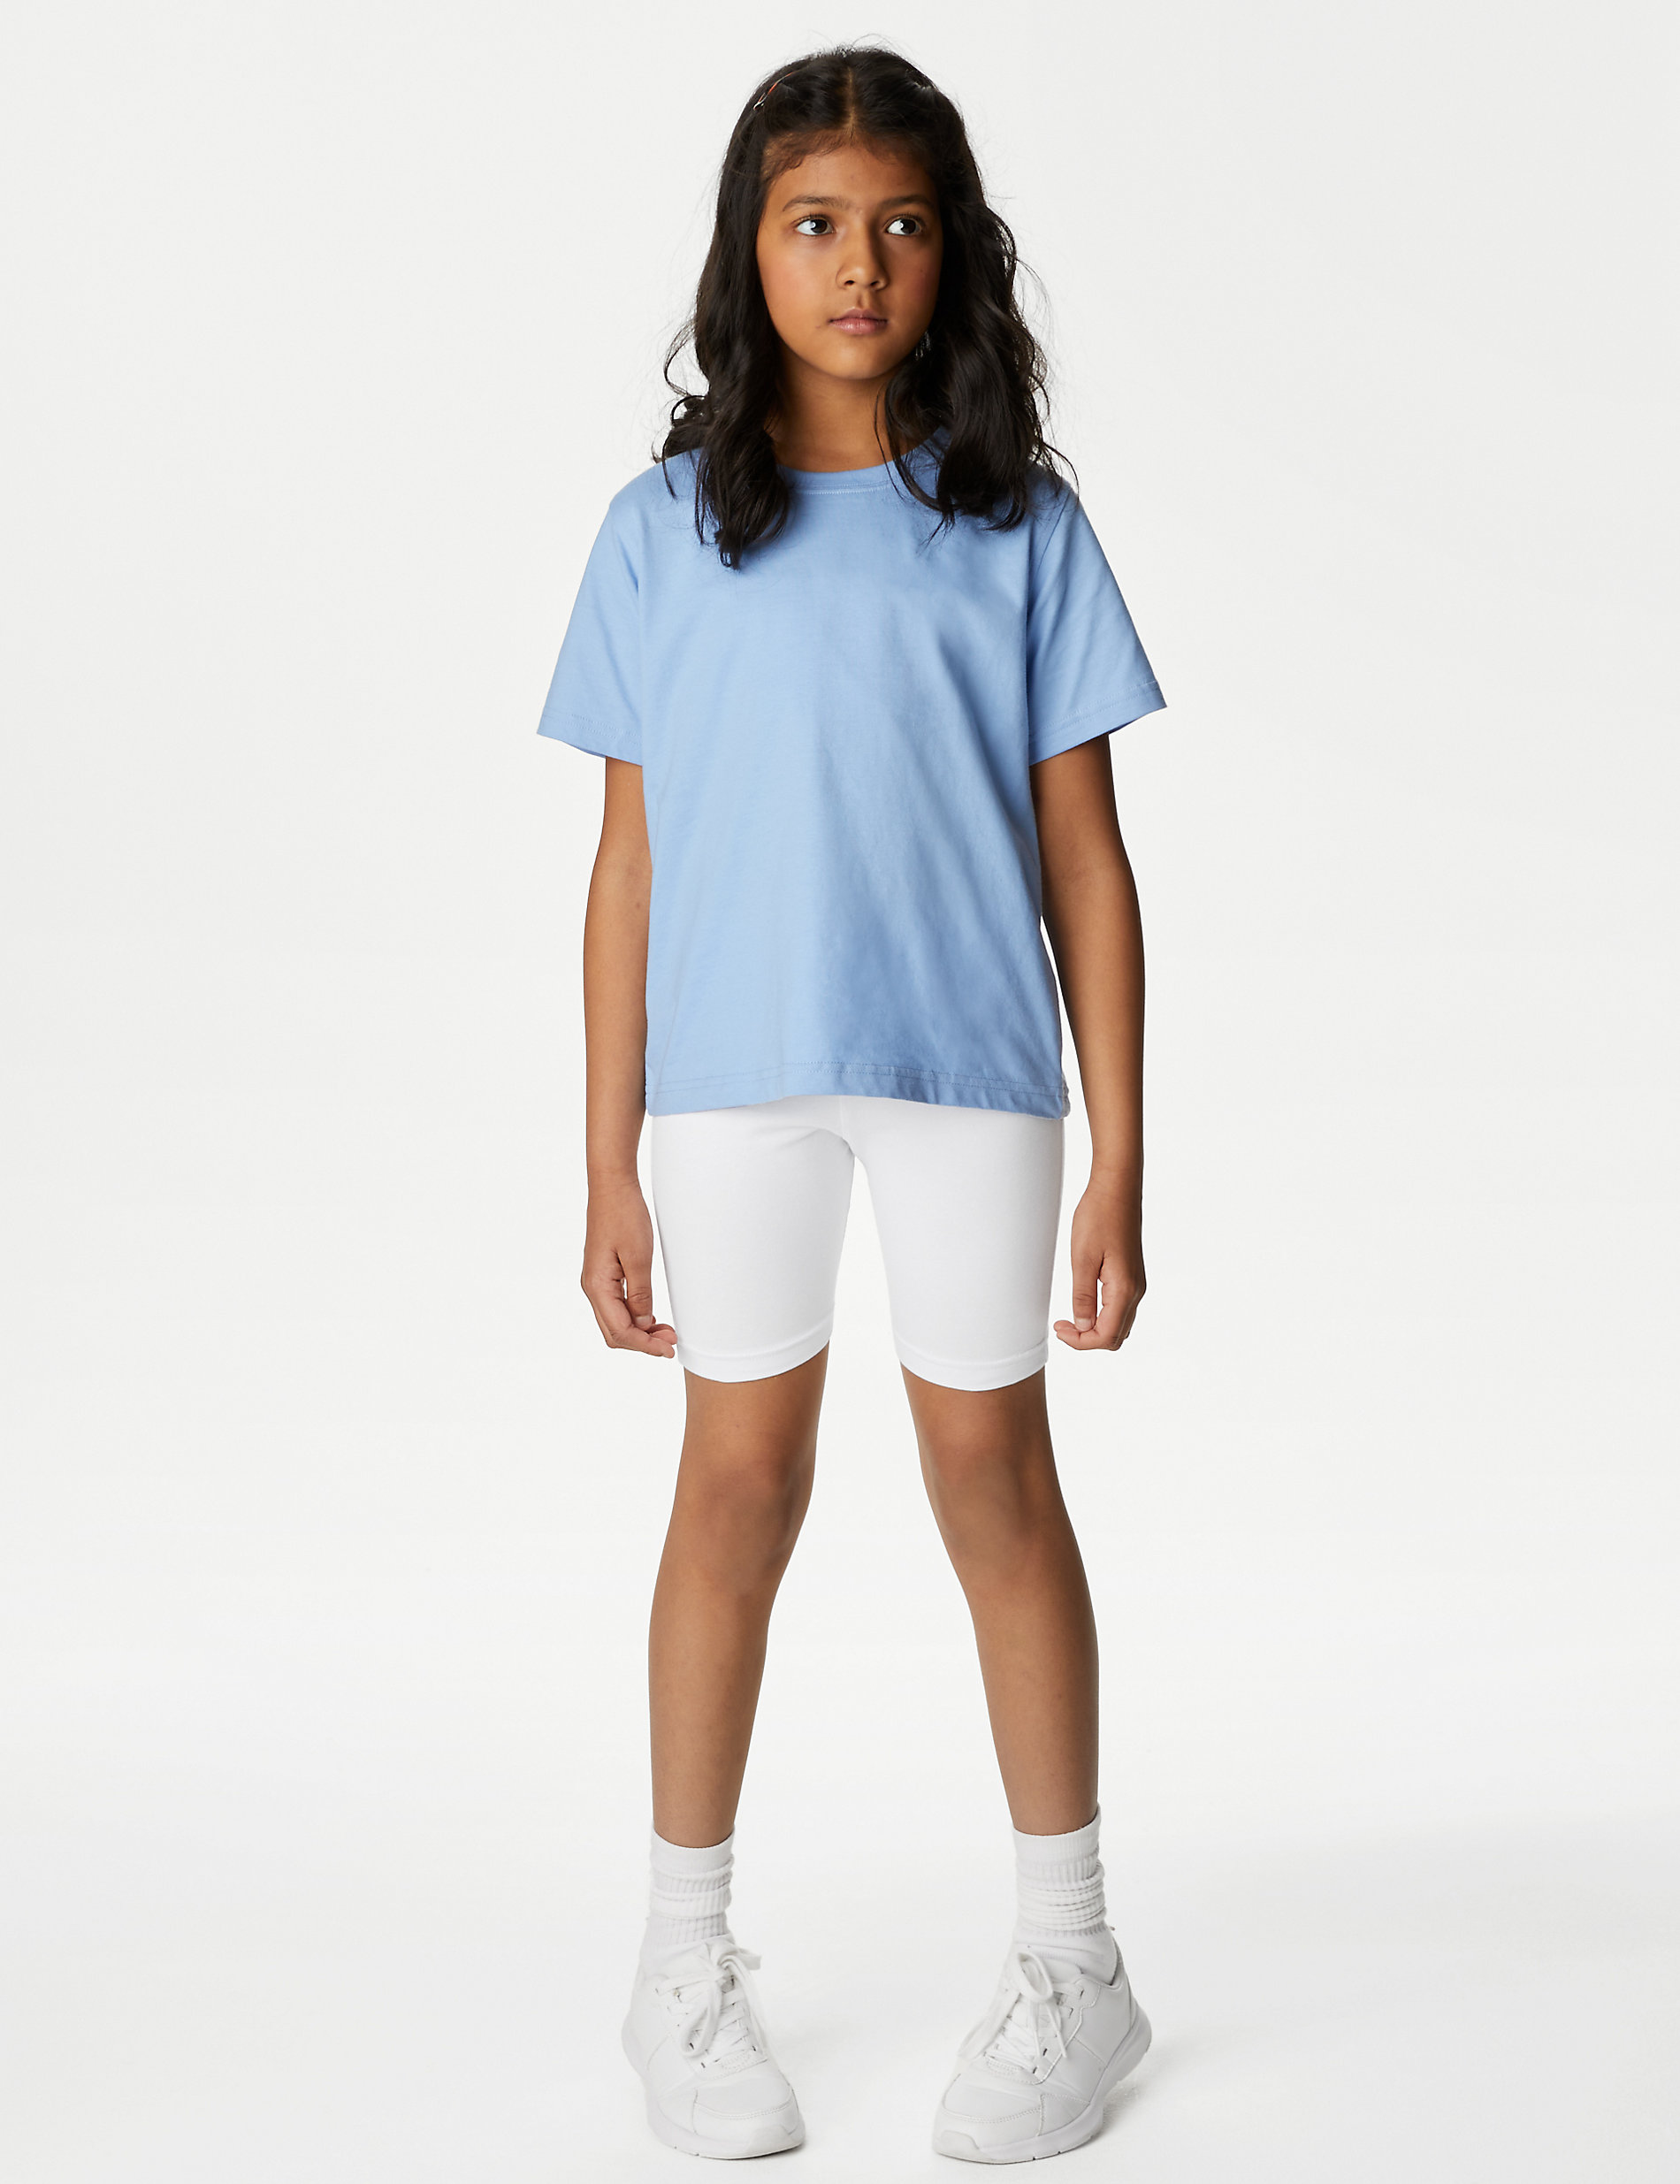 2pk Girls' Cotton with Stretch School Shorts (2-16 Yrs)